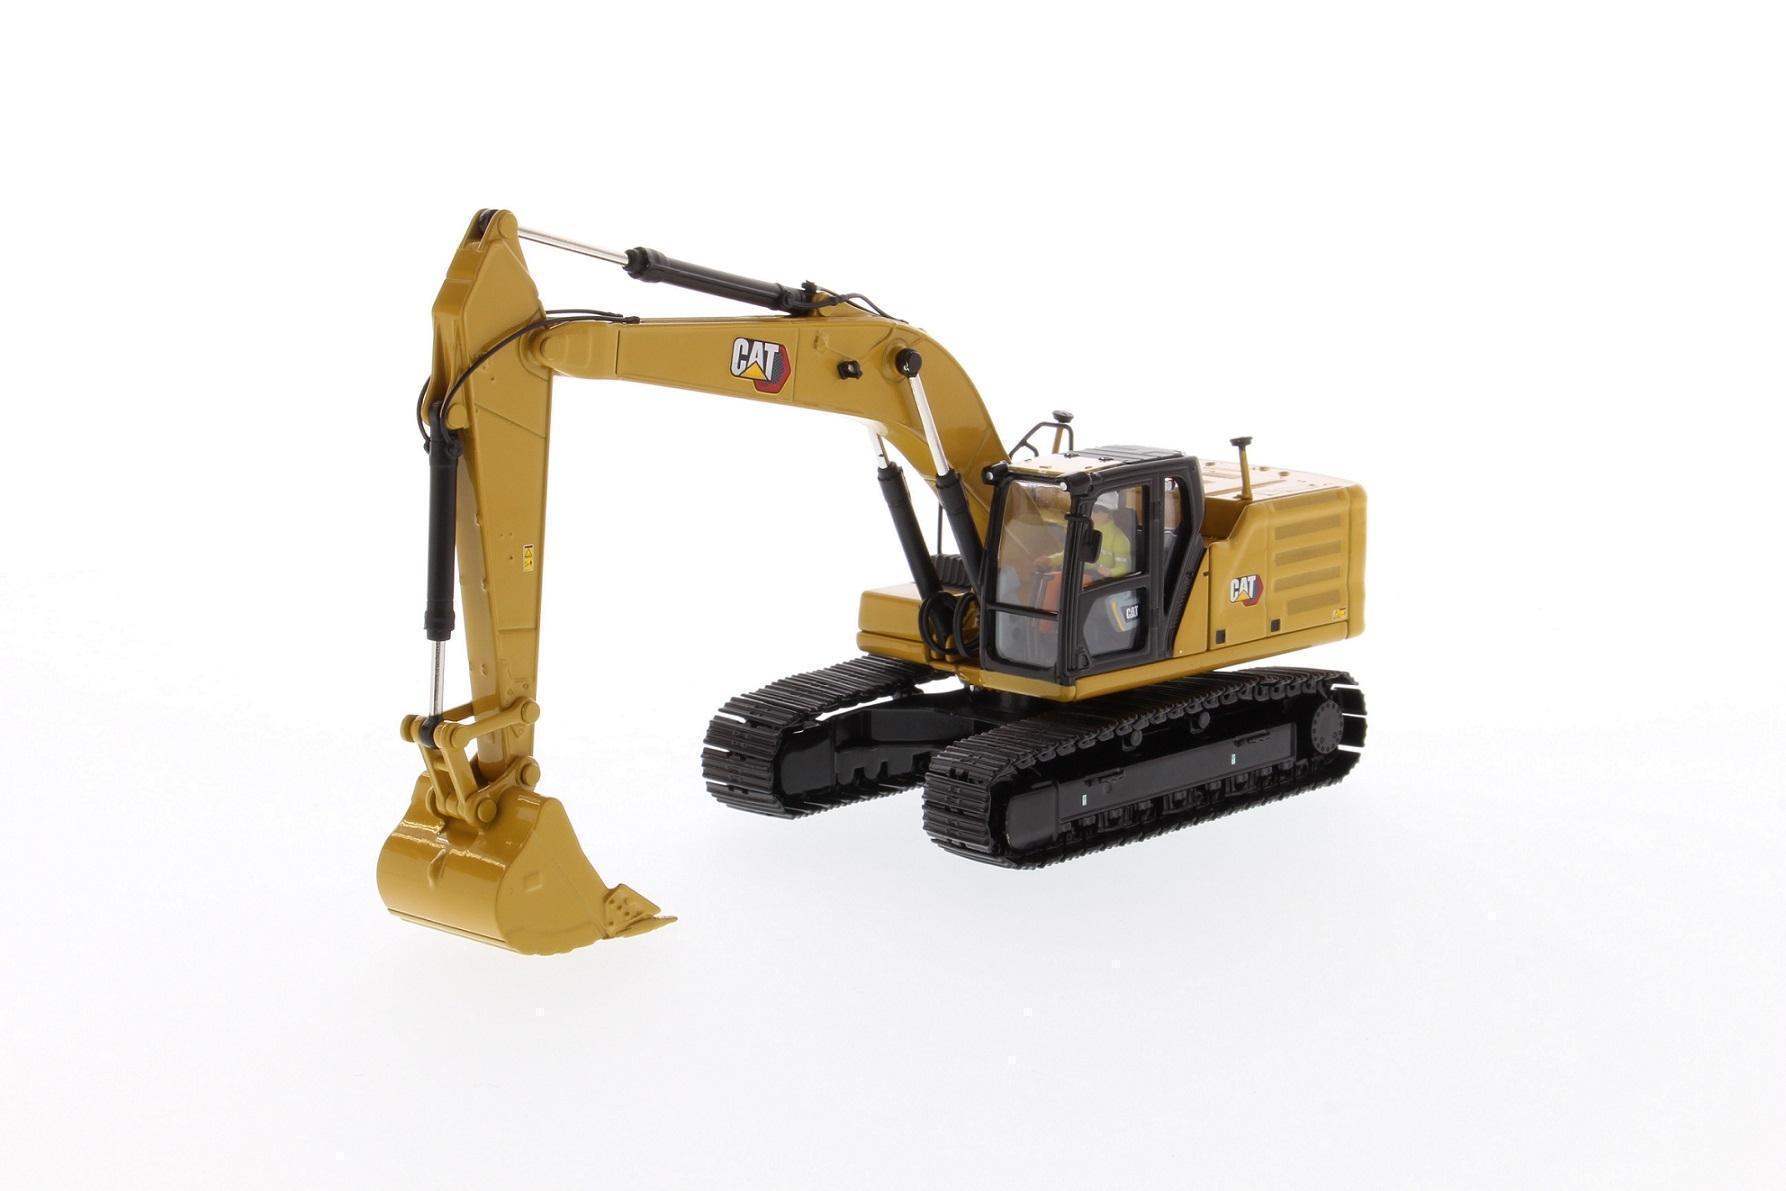 Caterpillar Cat 330 Next Generation Hydraulic Excavator 85585 1:50 Scale Adult Collectible Diecast Model Replica